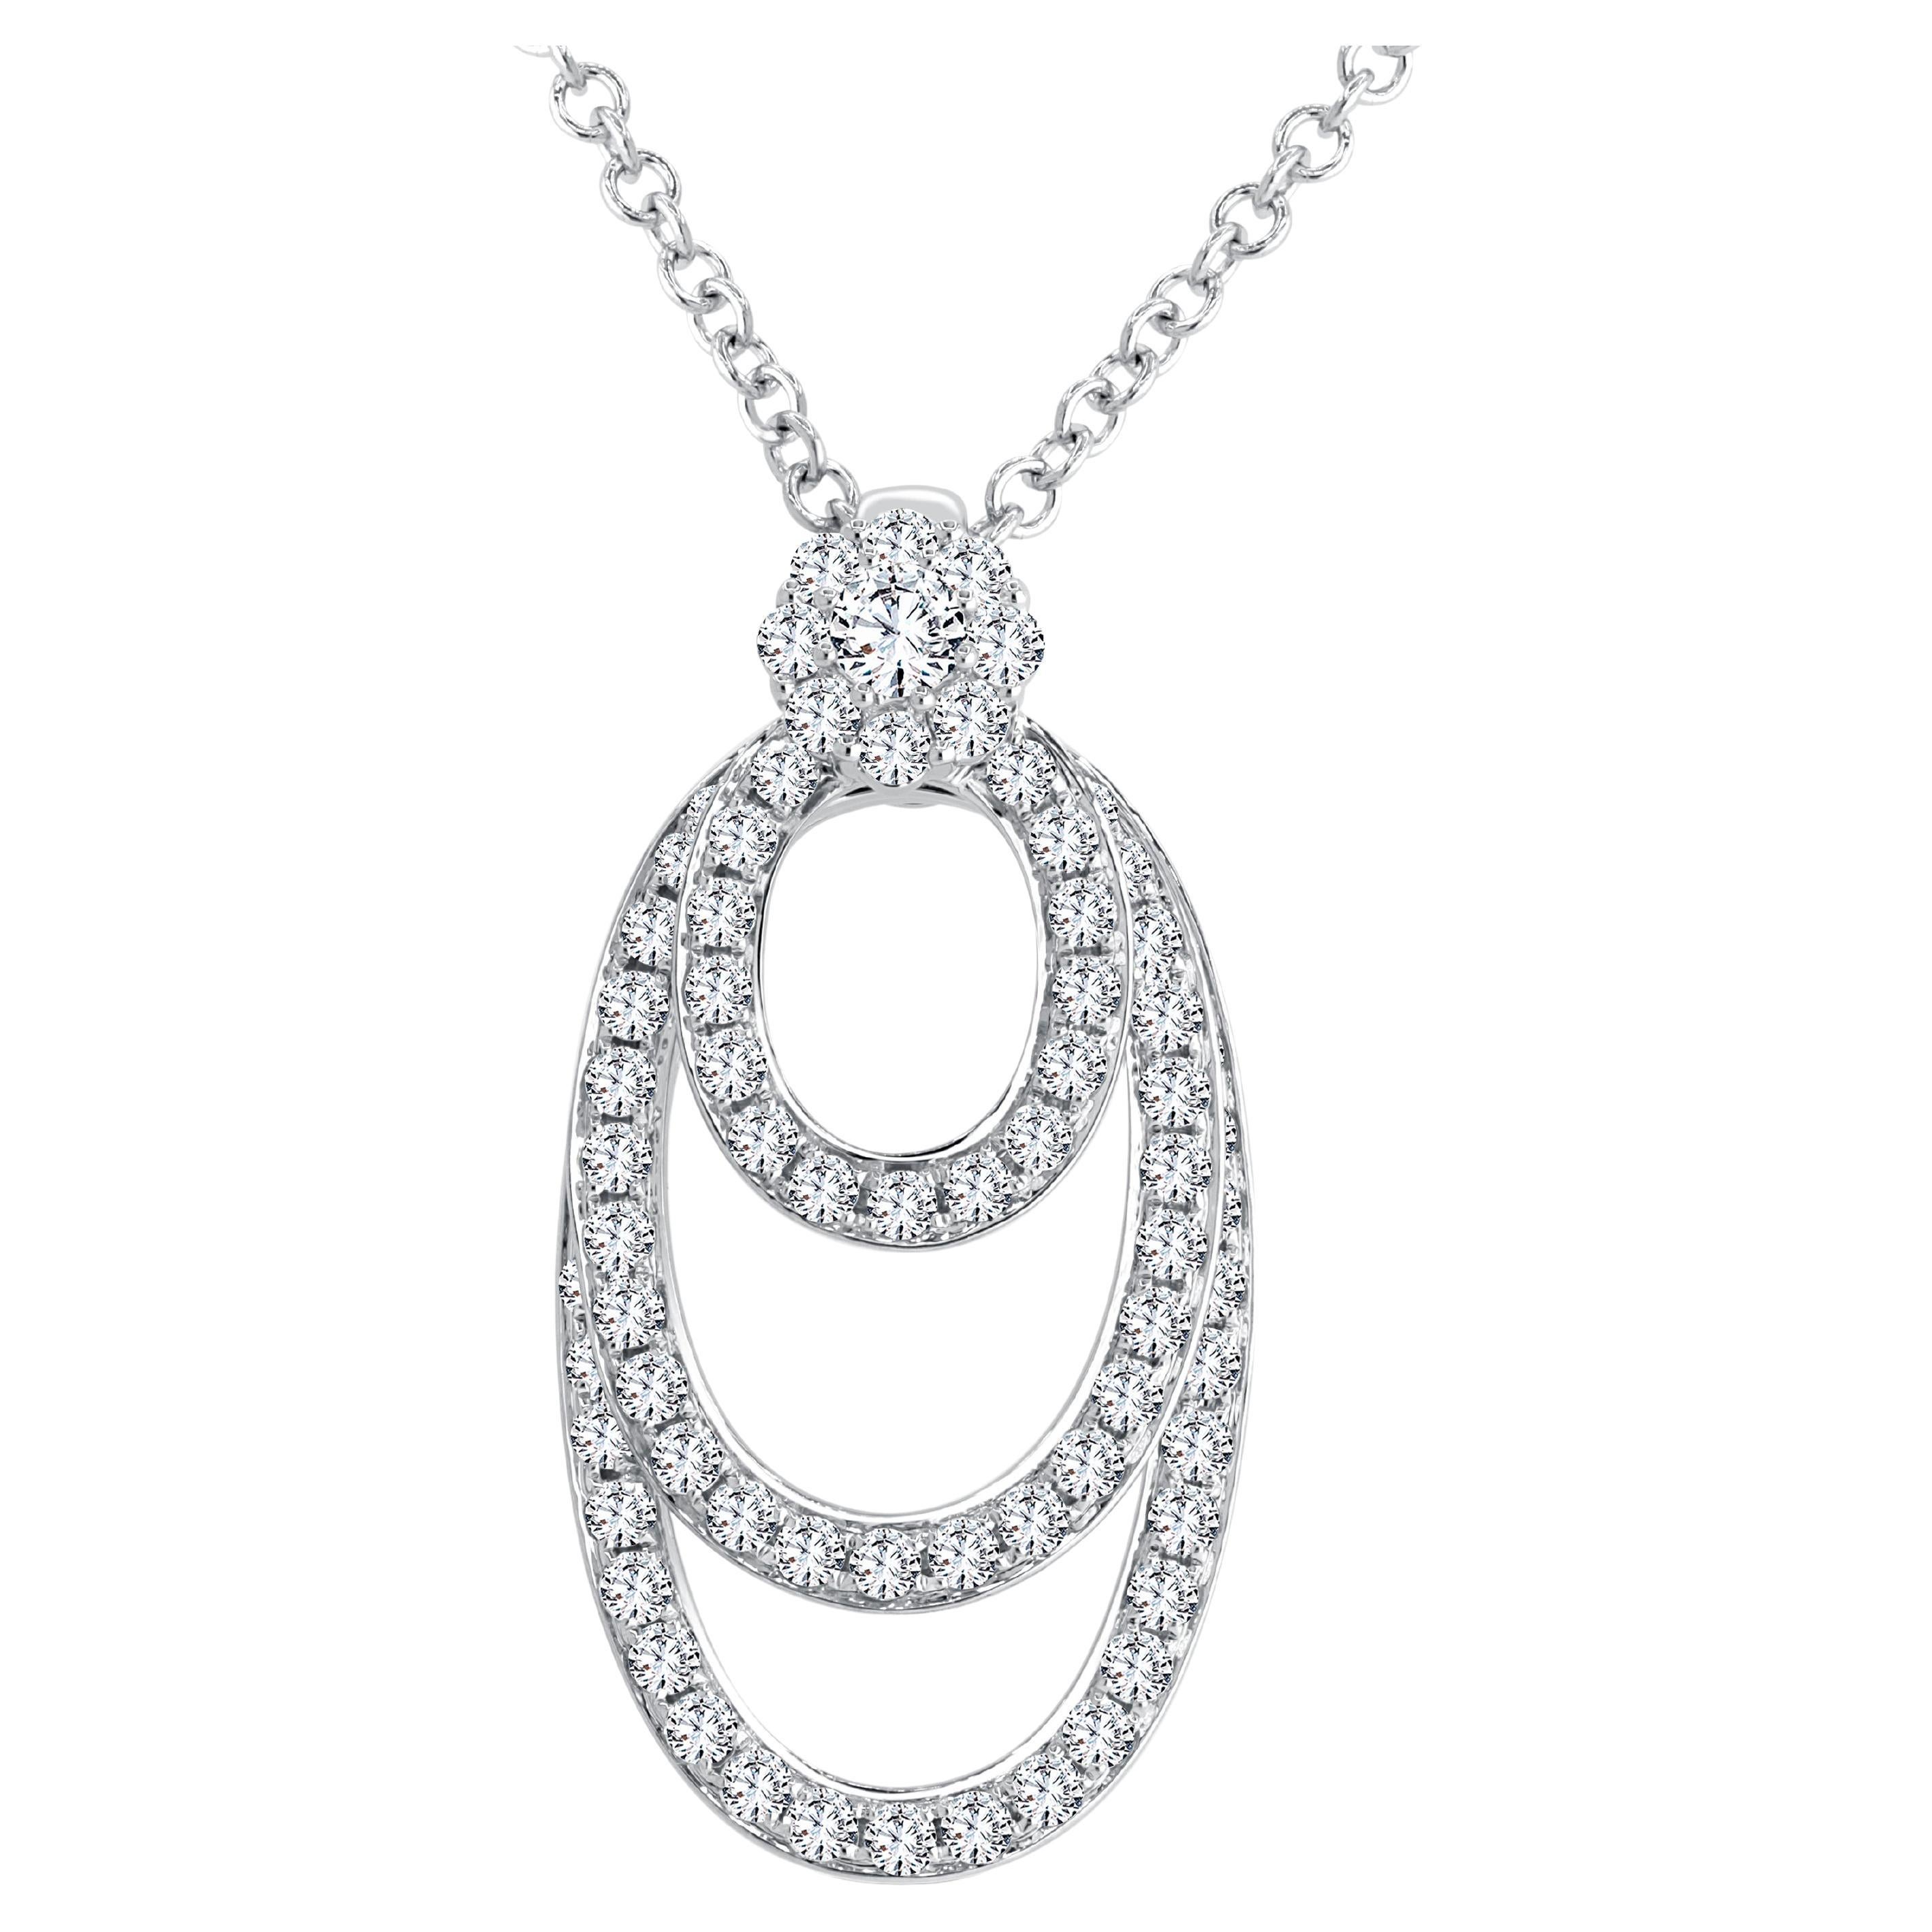 0.8 Carat Three Tier Oval Frame Dangle Diamond Pendant Necklace in 18k White